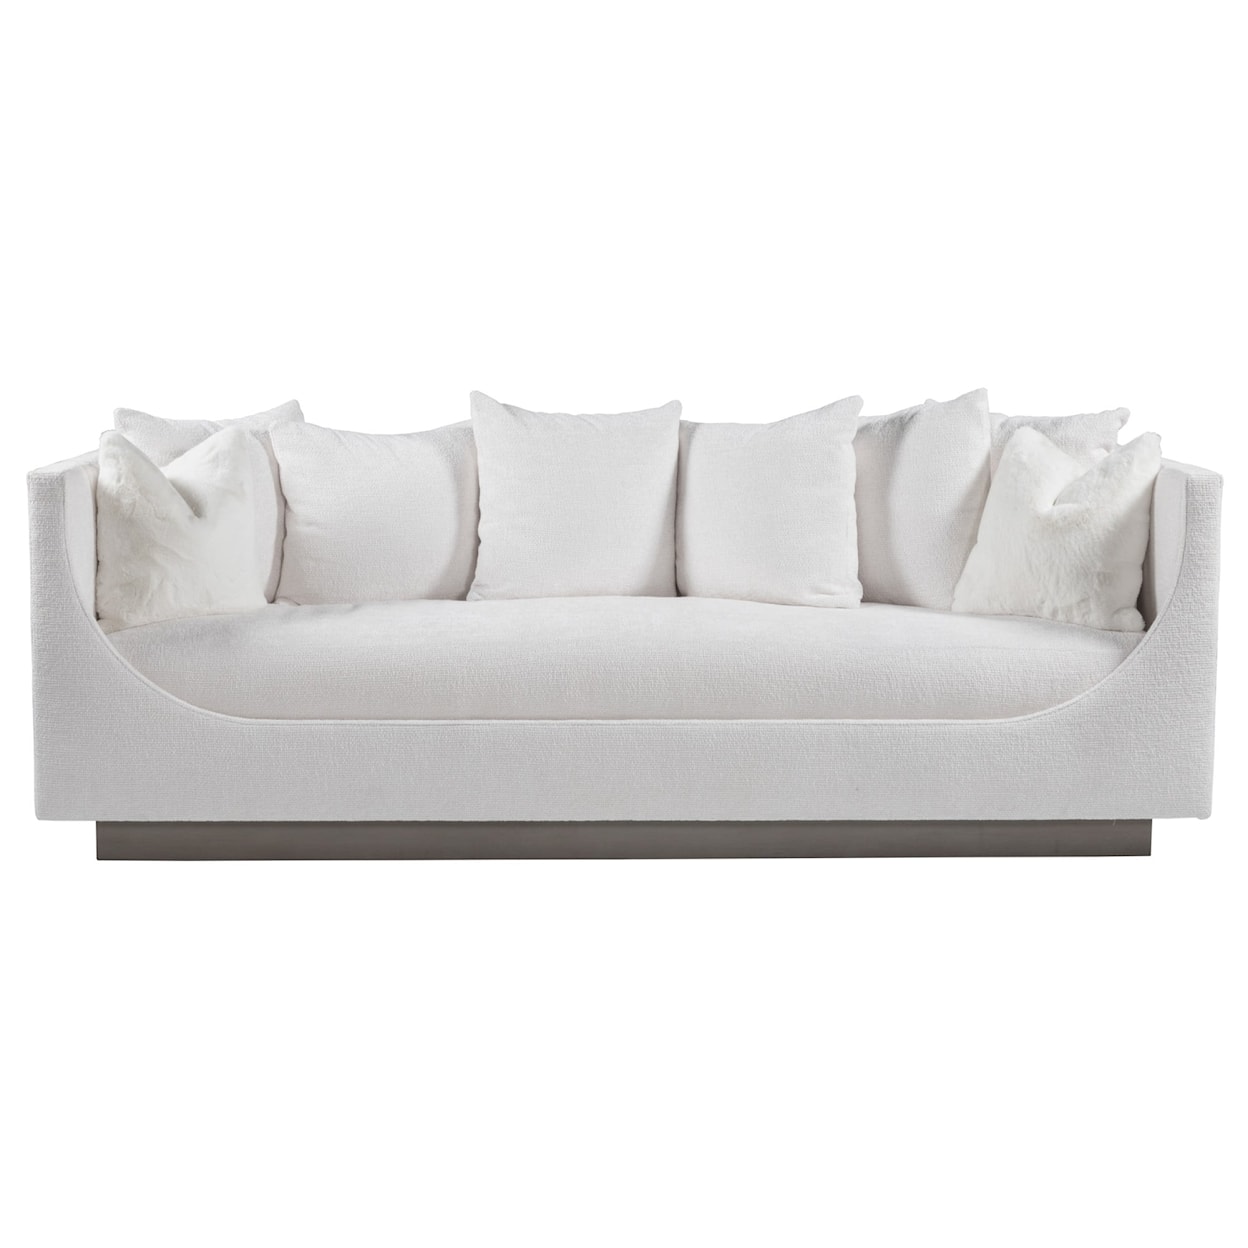 Artistica Artistica Upholstery Claudette Bench Seat Sofa